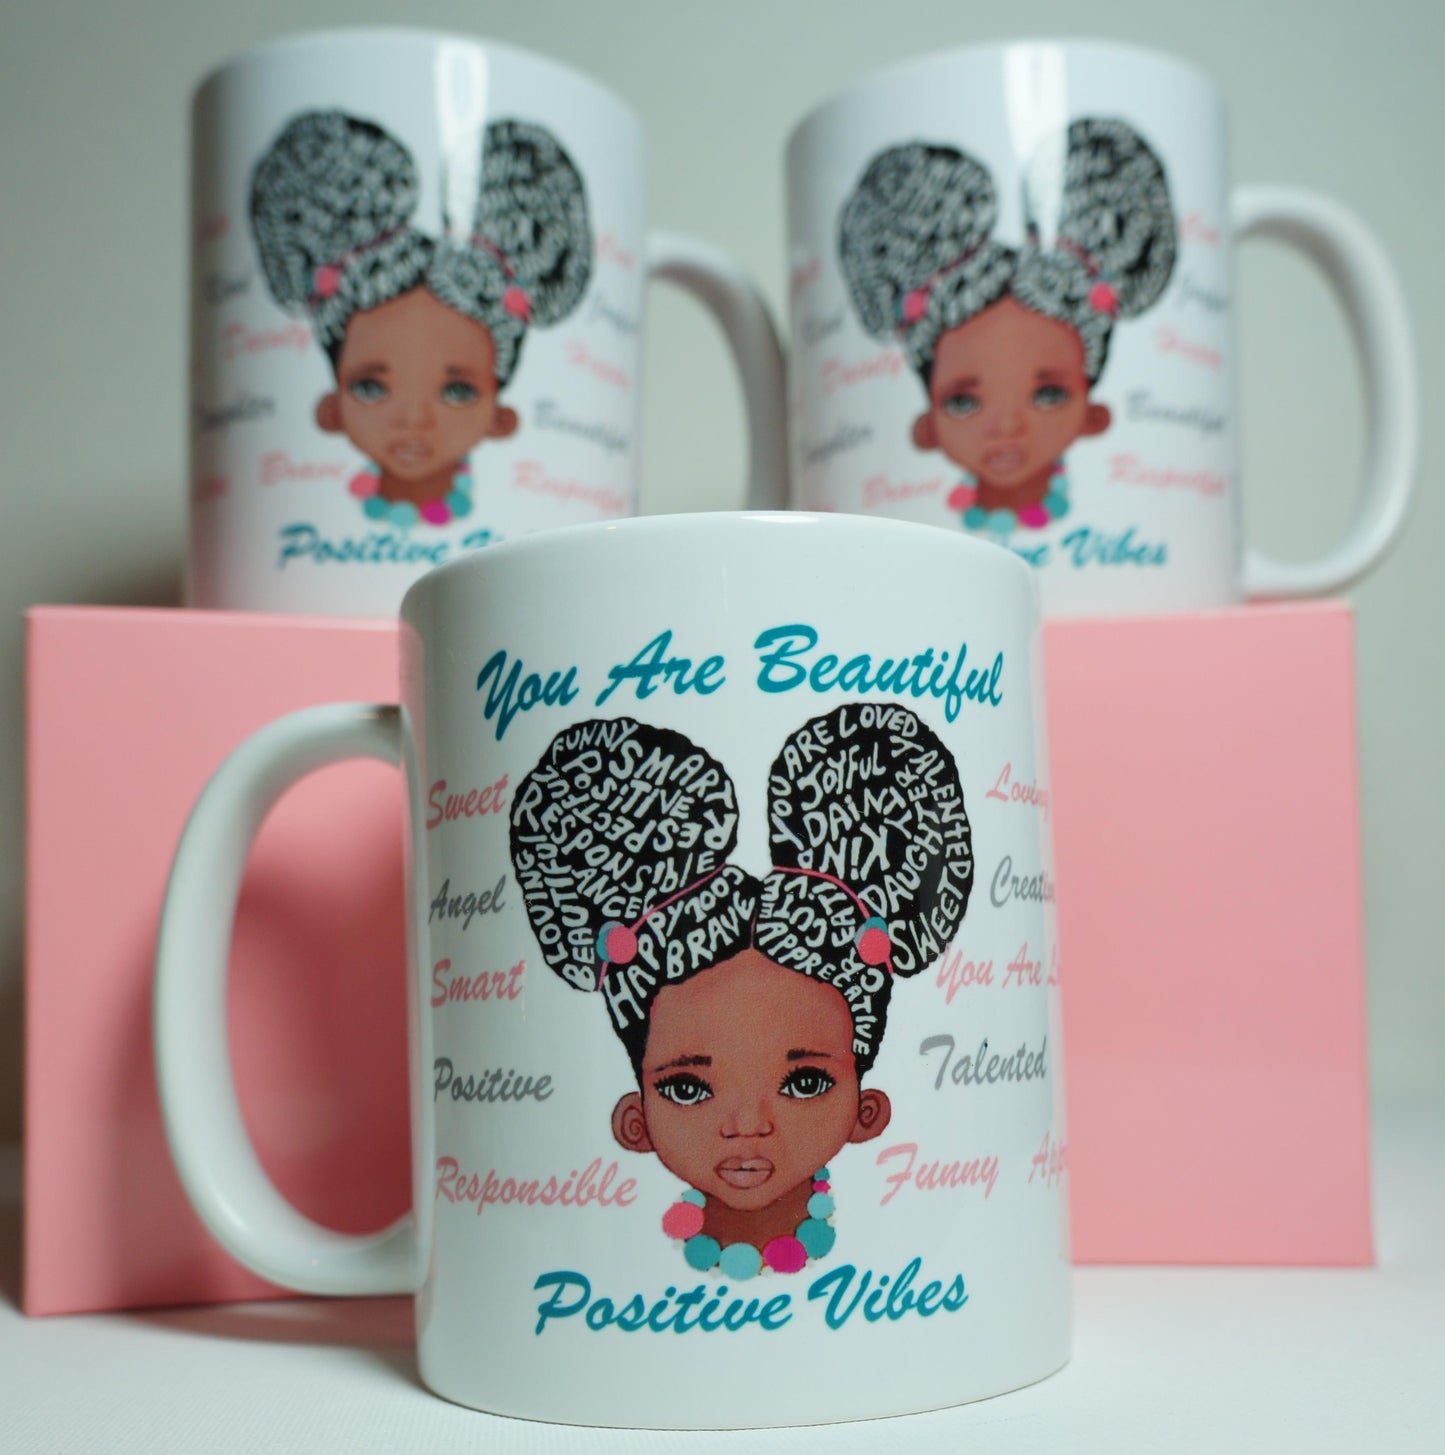 Positive Vibe Ceramic Mug